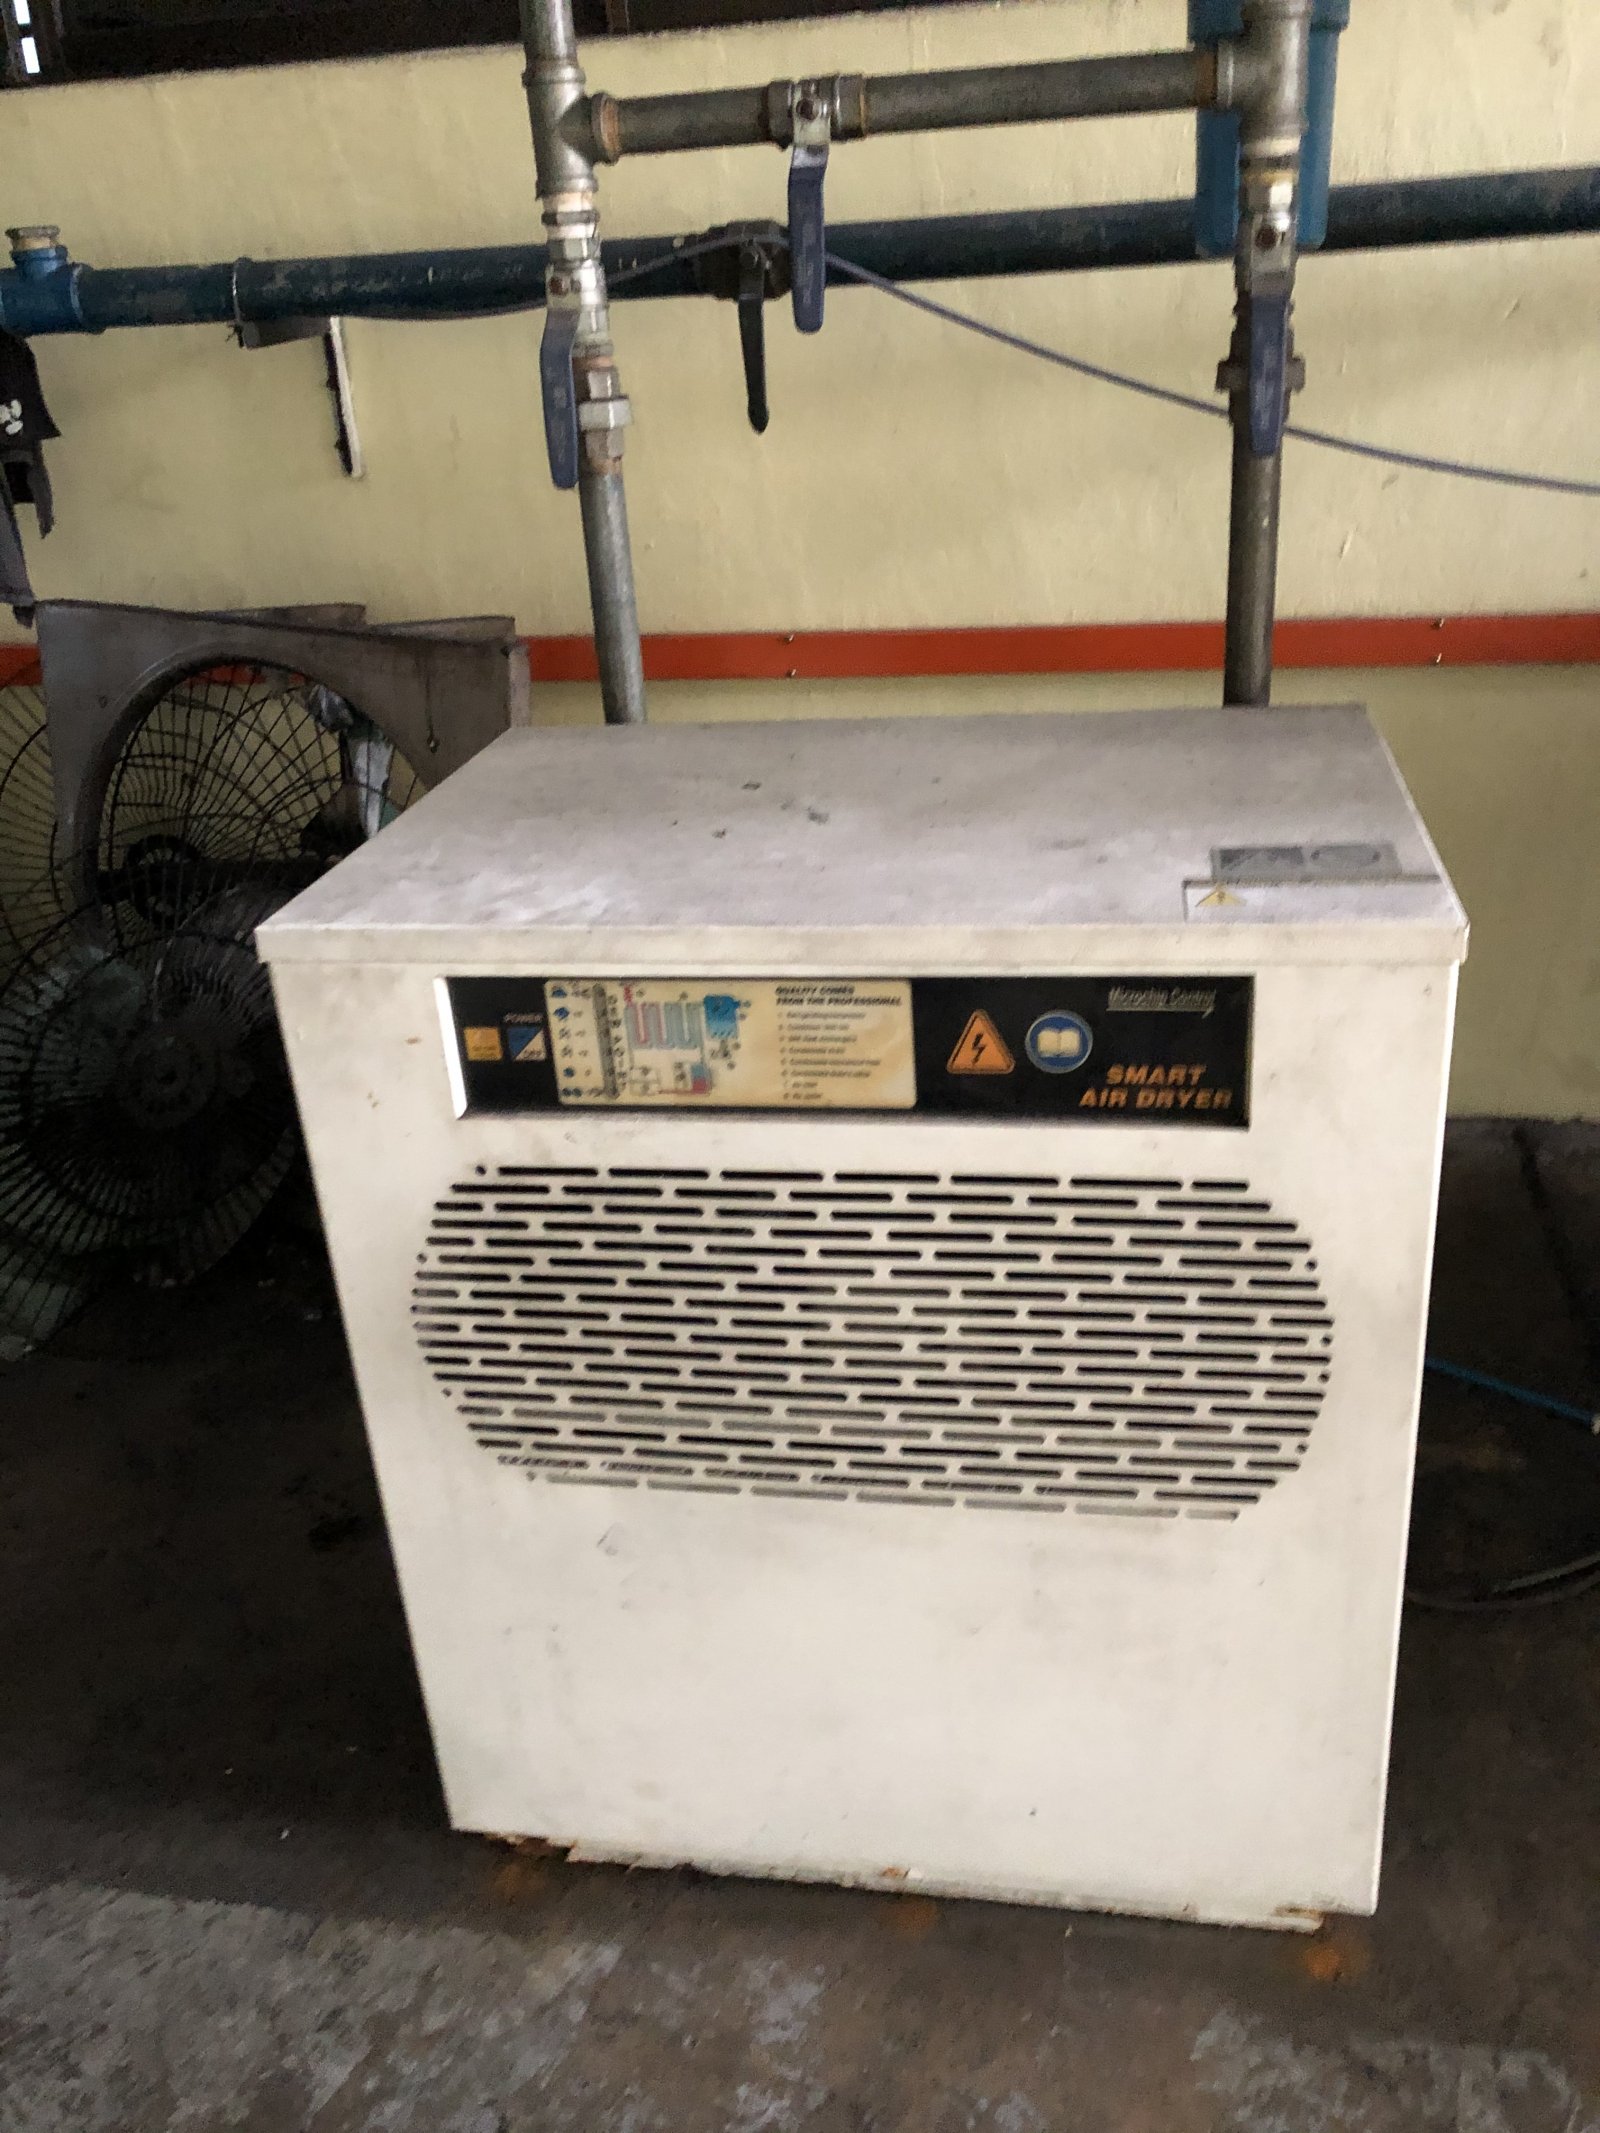 Smart Air Dryer